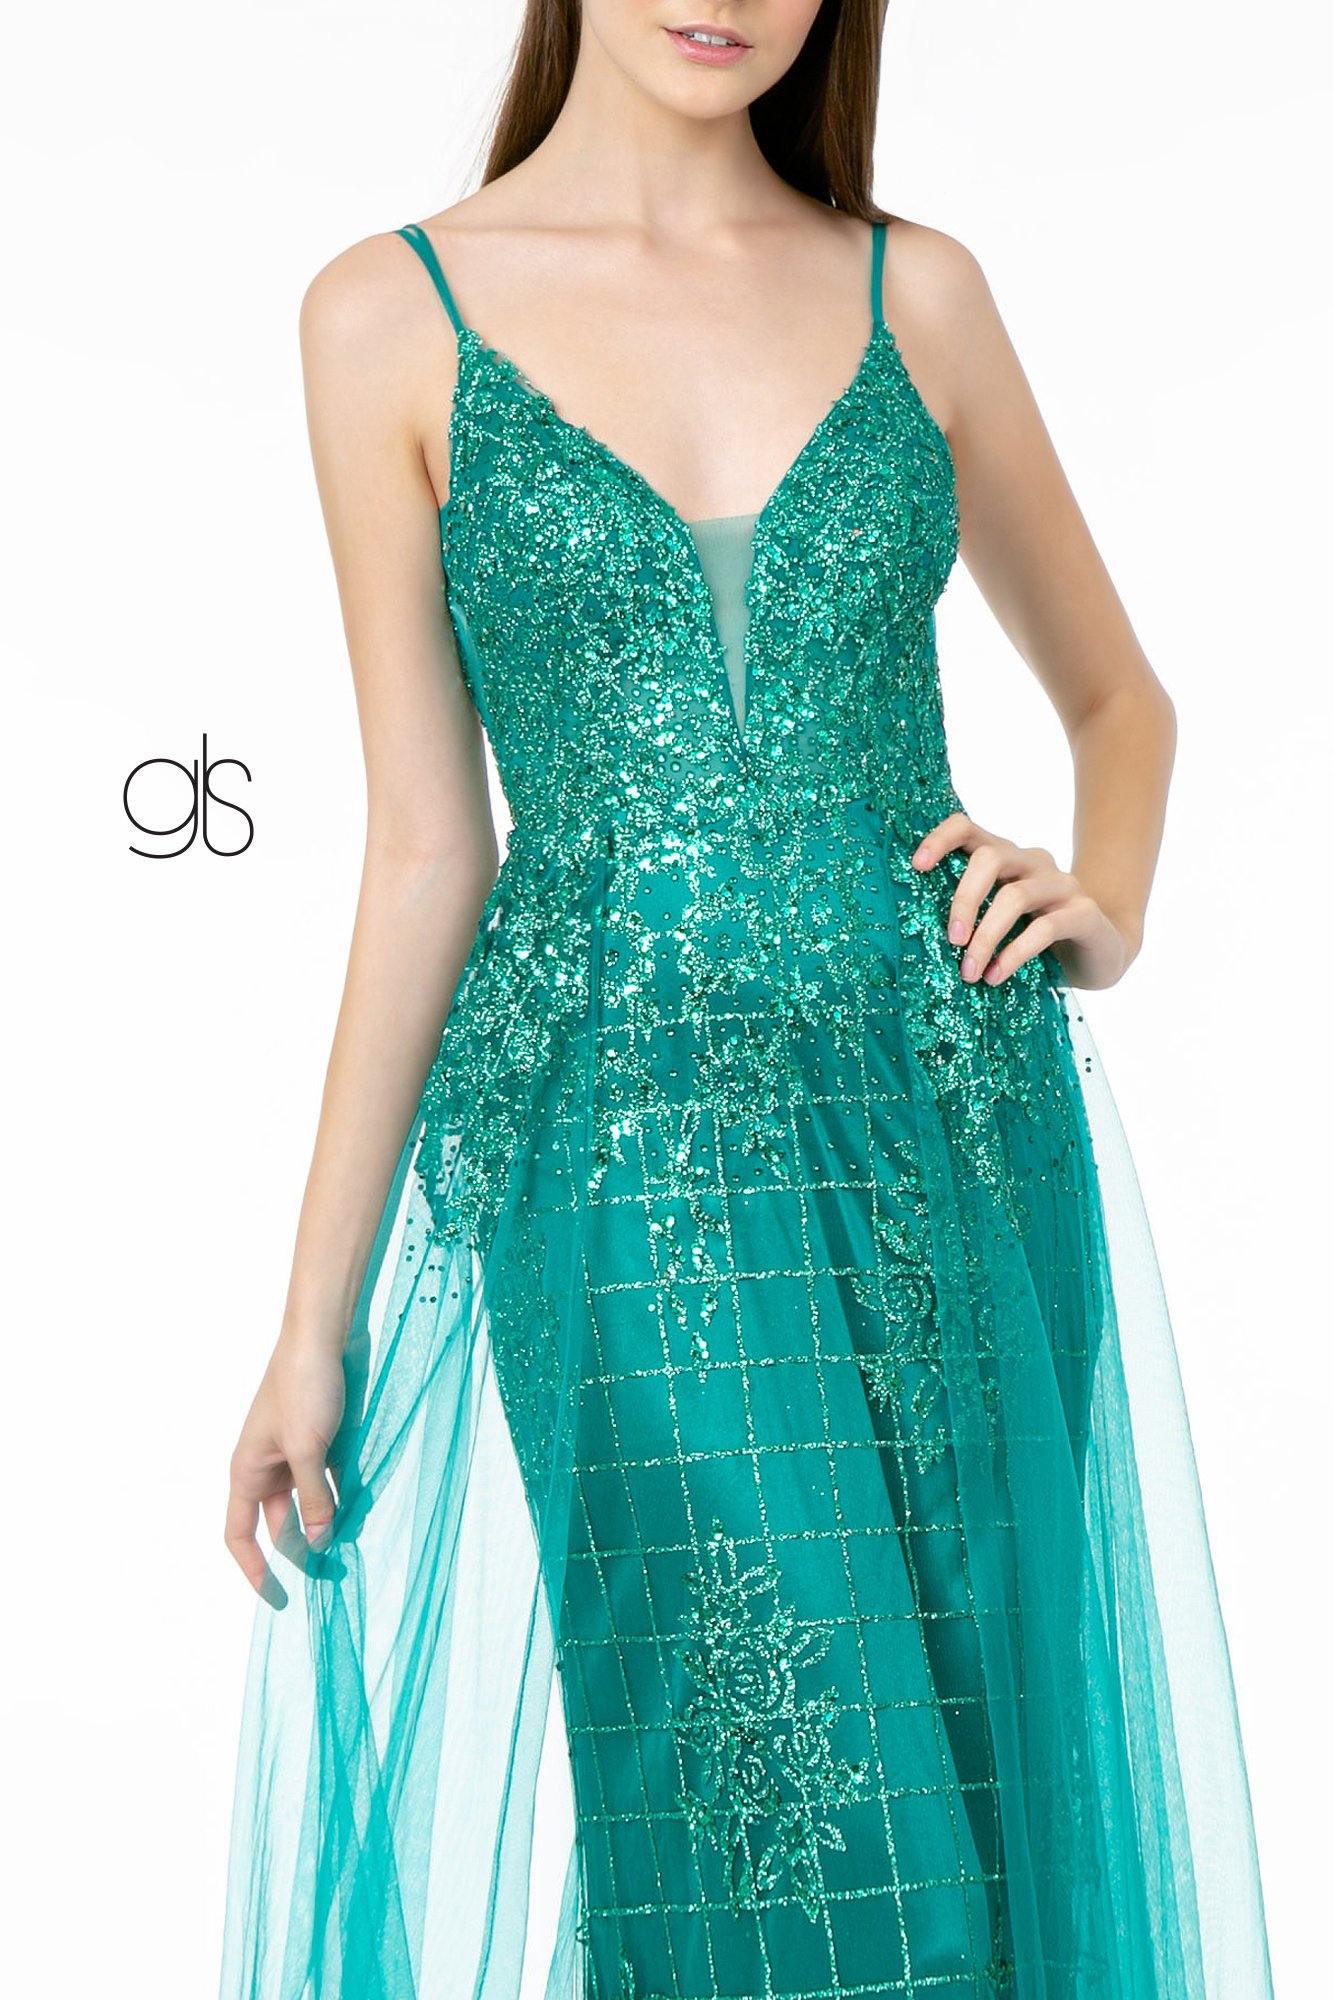 Glitter Mesh Illusion Deep V-Neck Long Prom Dress Sale - The Dress Outlet